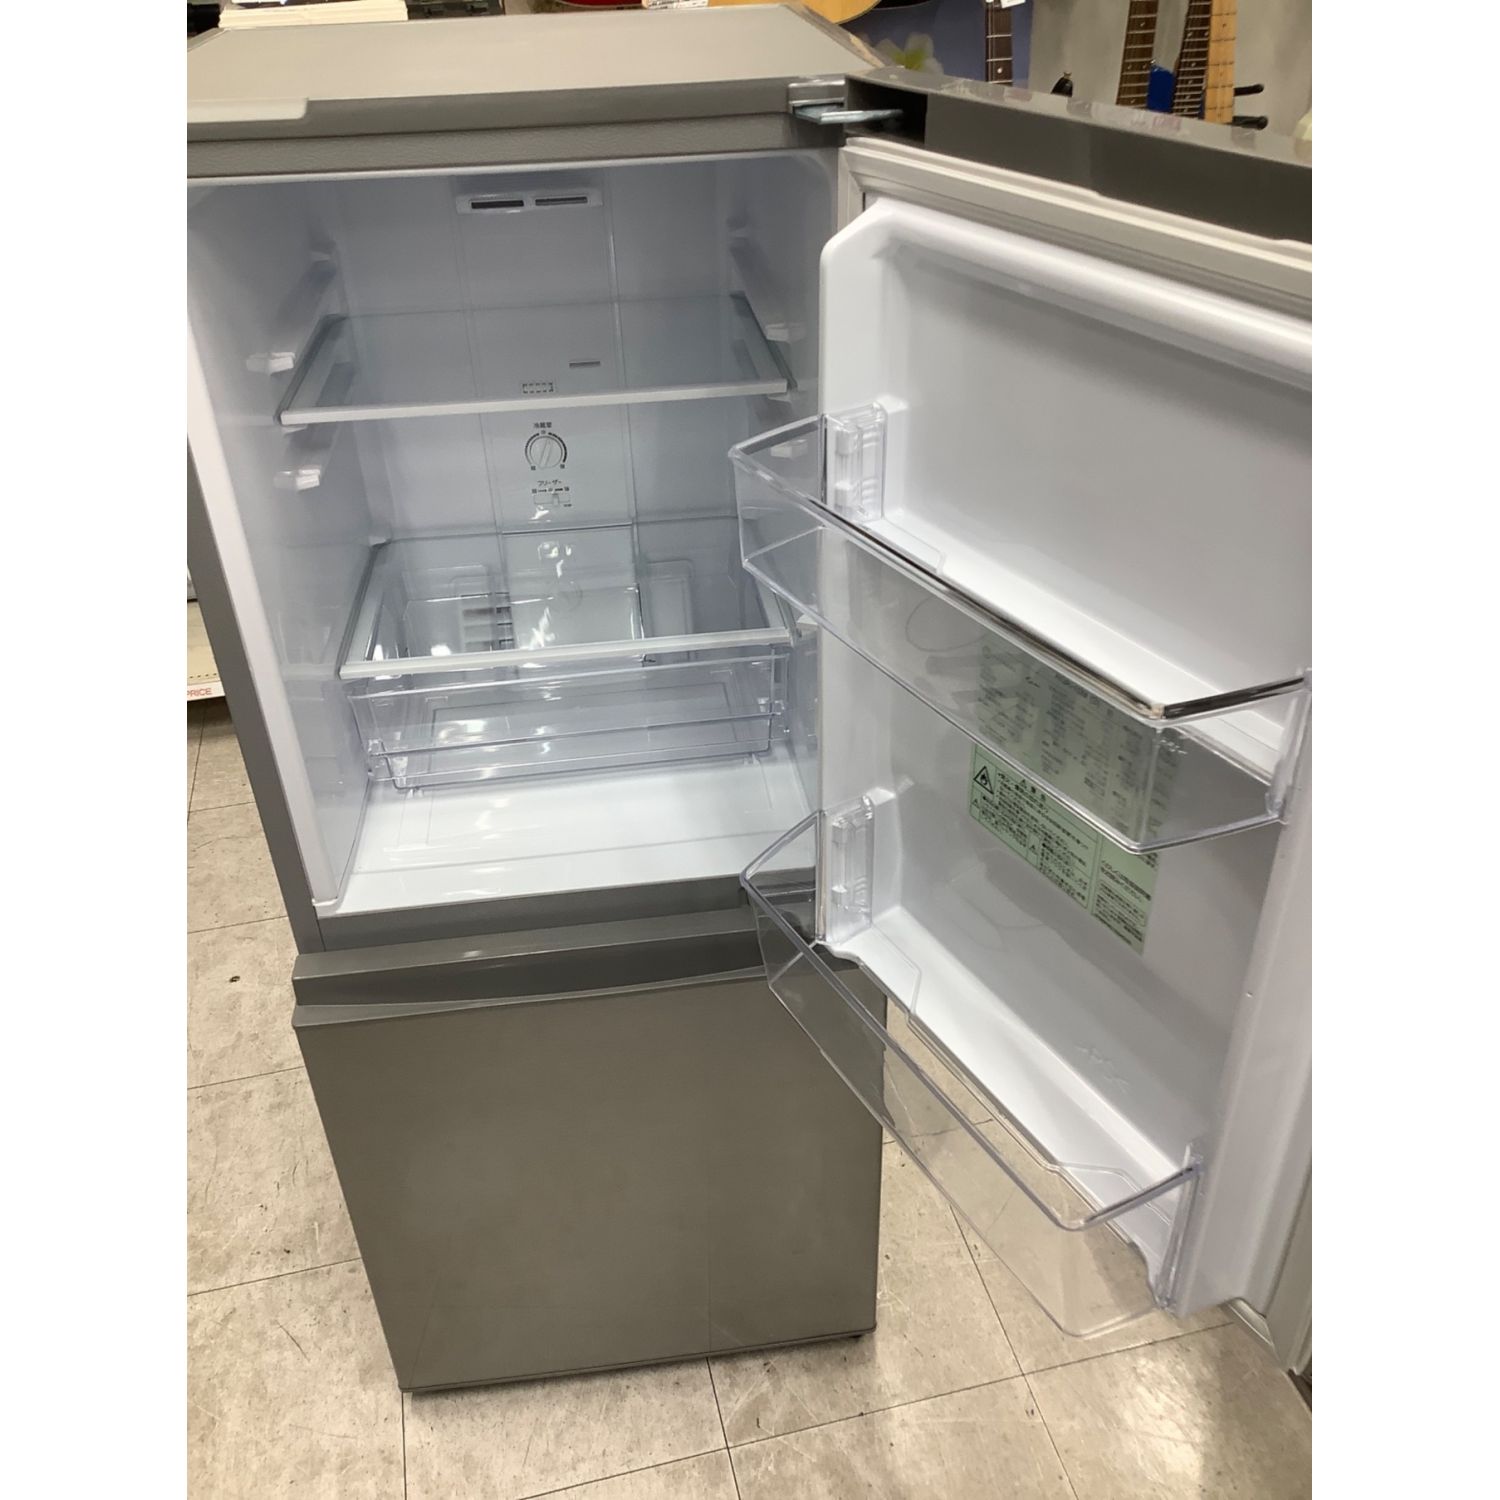 AQUA AQR-SV24J(W) 自動製氷機付き冷蔵庫 - 冷蔵庫